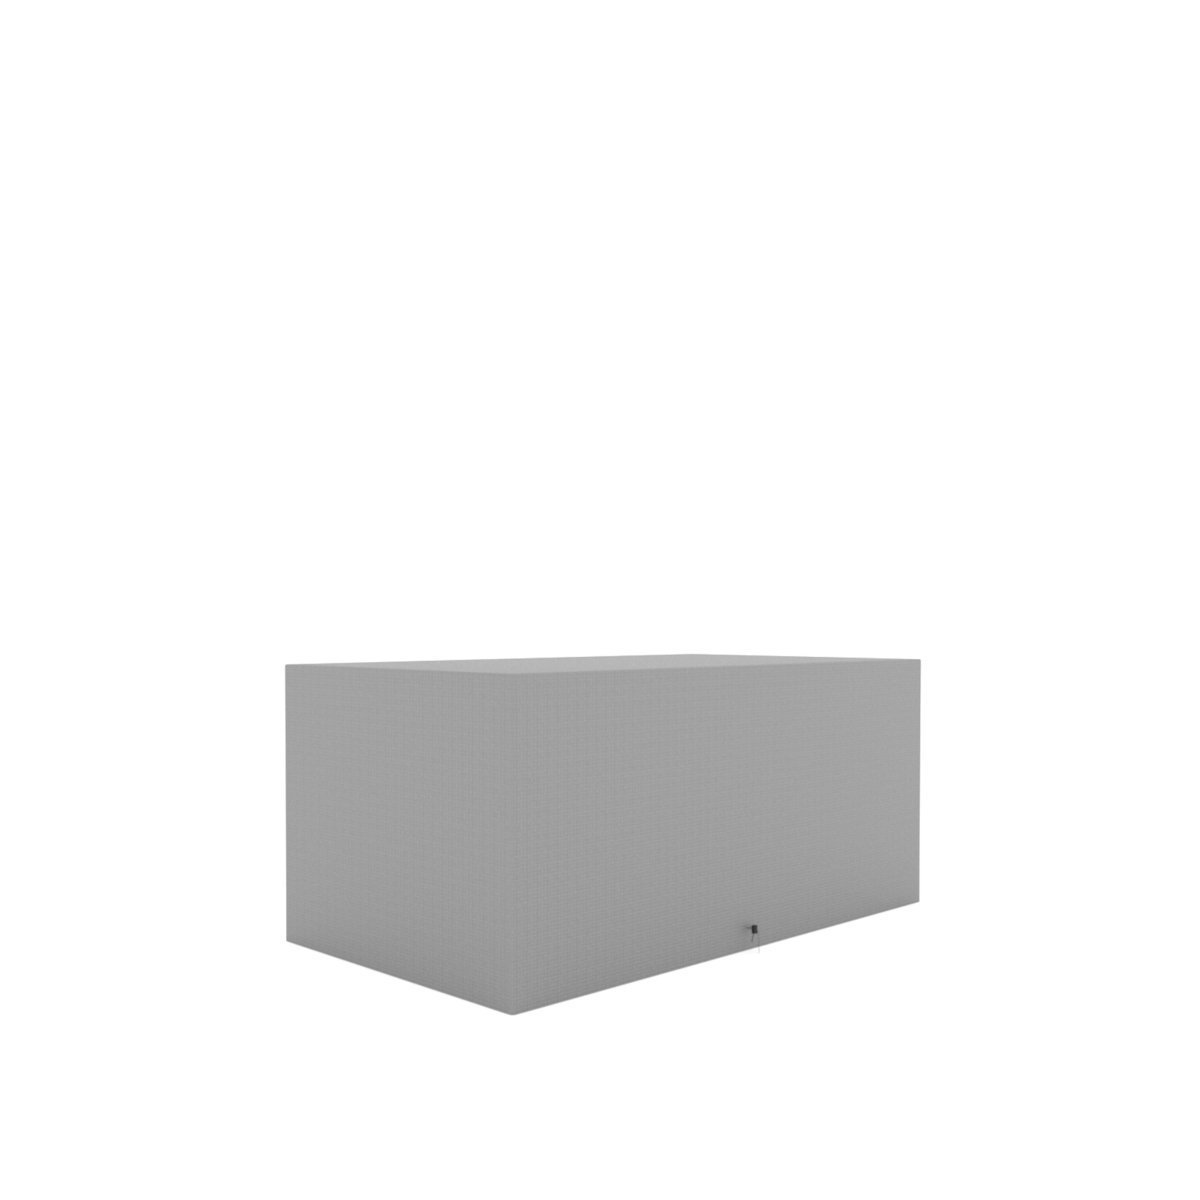 Burnham 170cm Teak Storage Box Protective Cover